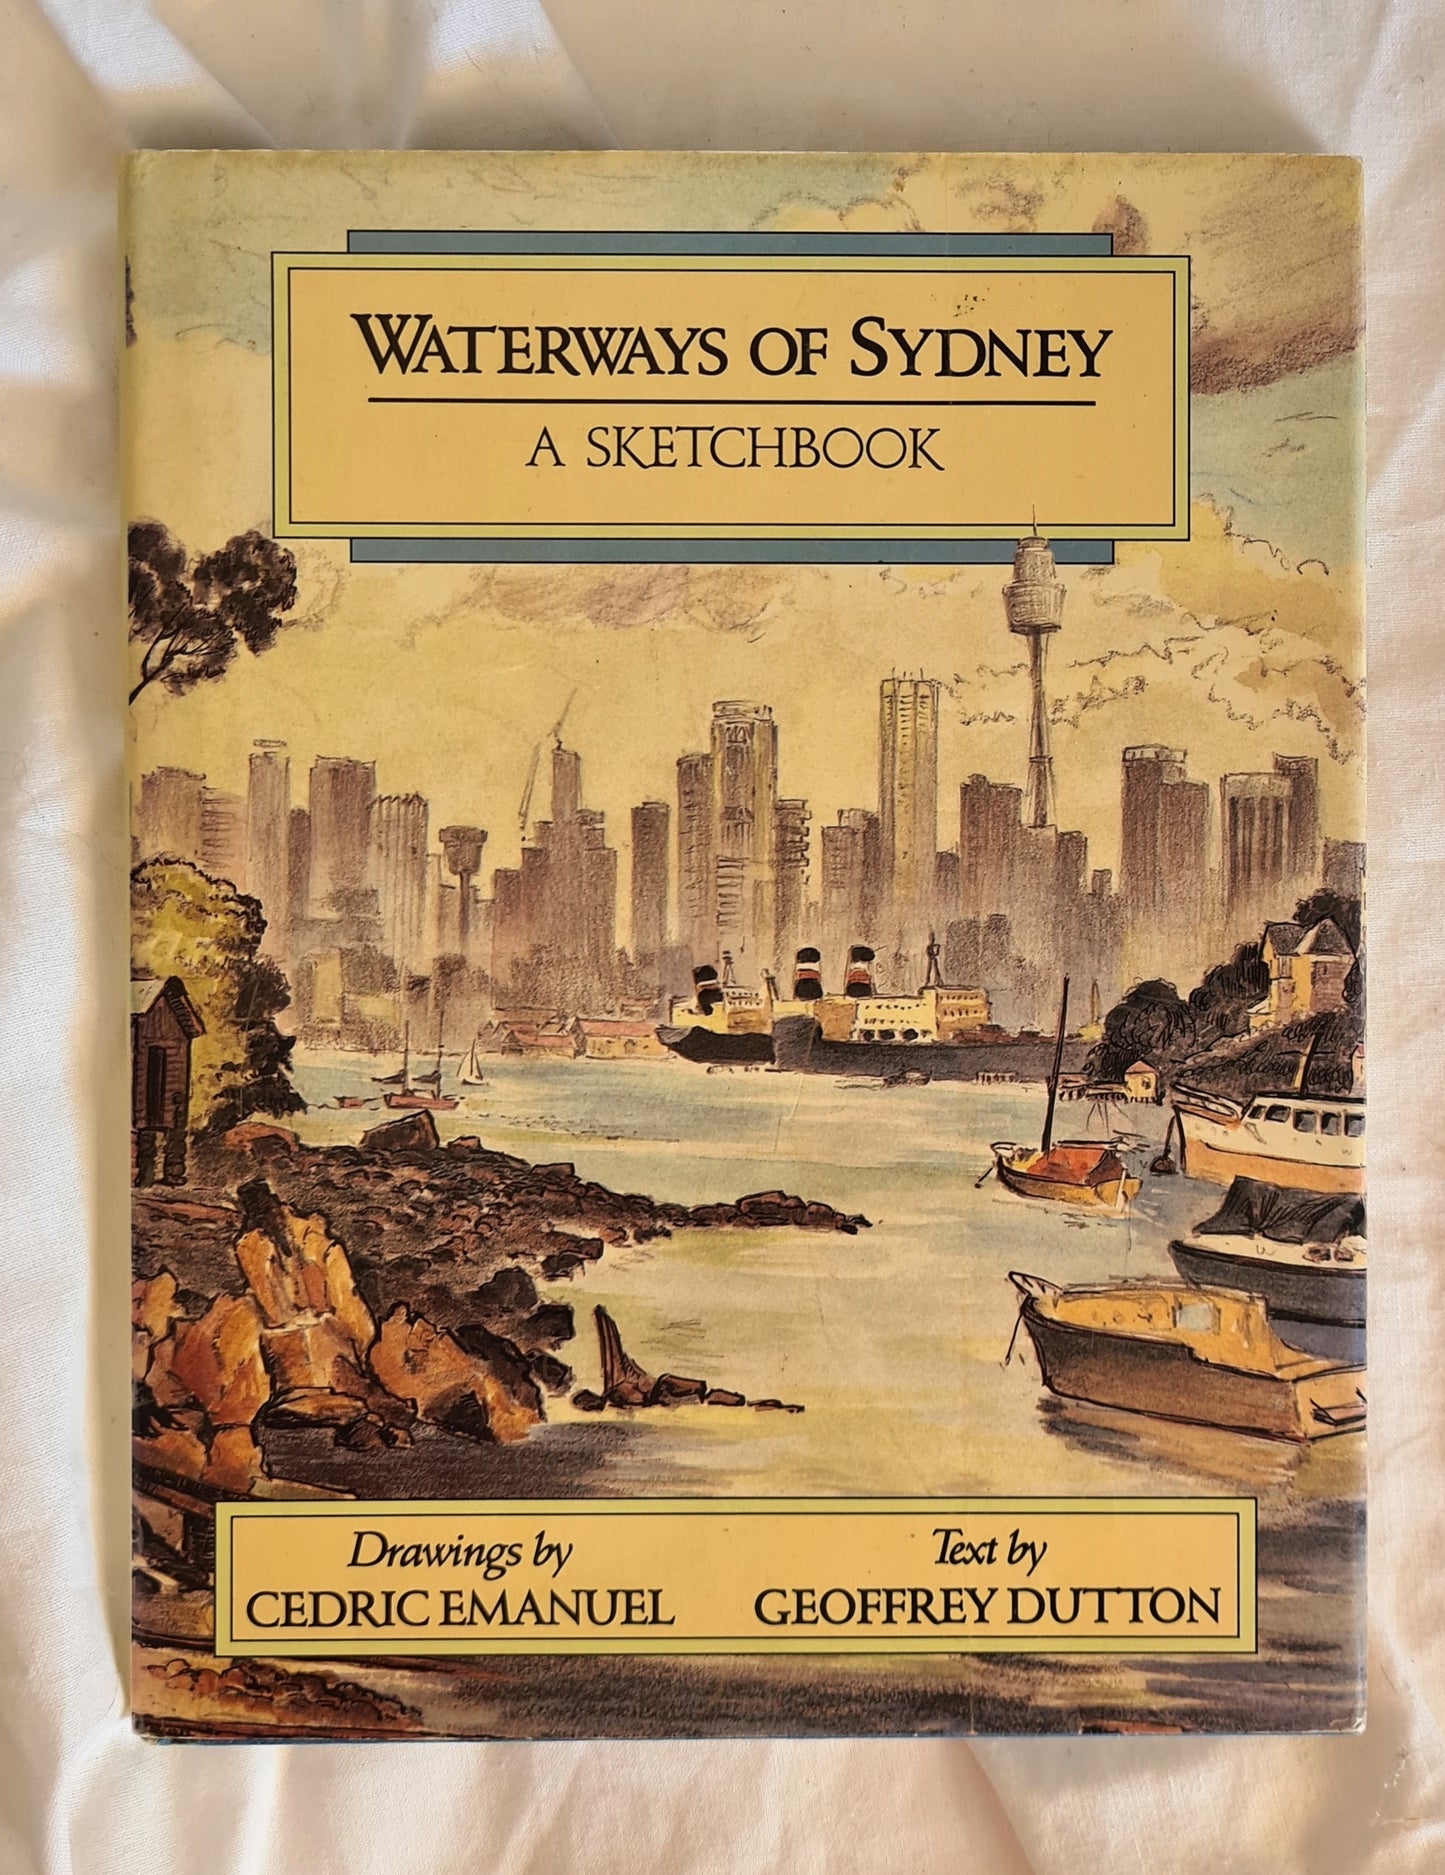 Waterways of Sydney  A Sketchbook  Drawings by Cedric Emanuel  Text by Geoffrey Dutton